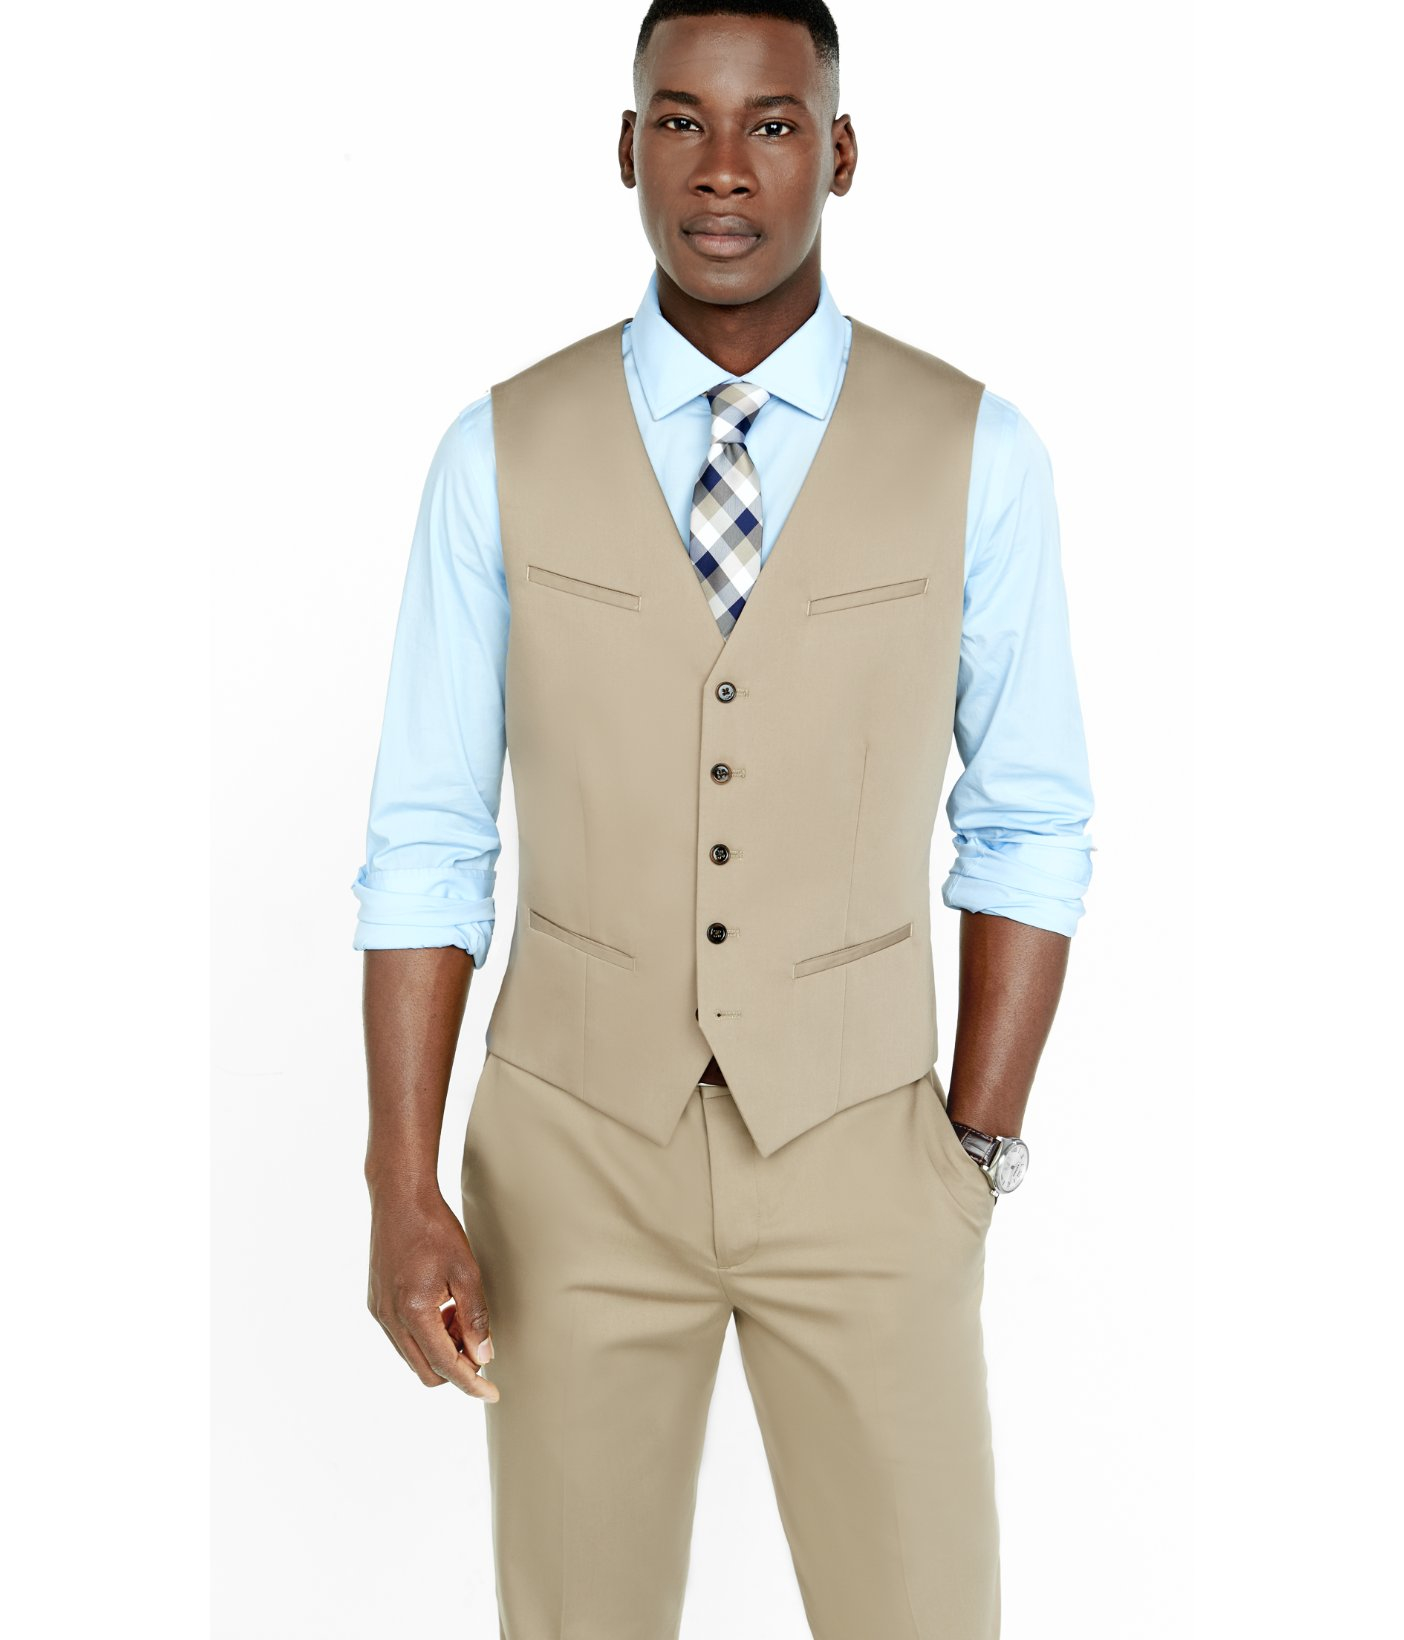 Express Khaki Cotton Sateen Vest in Natural for Men - Lyst